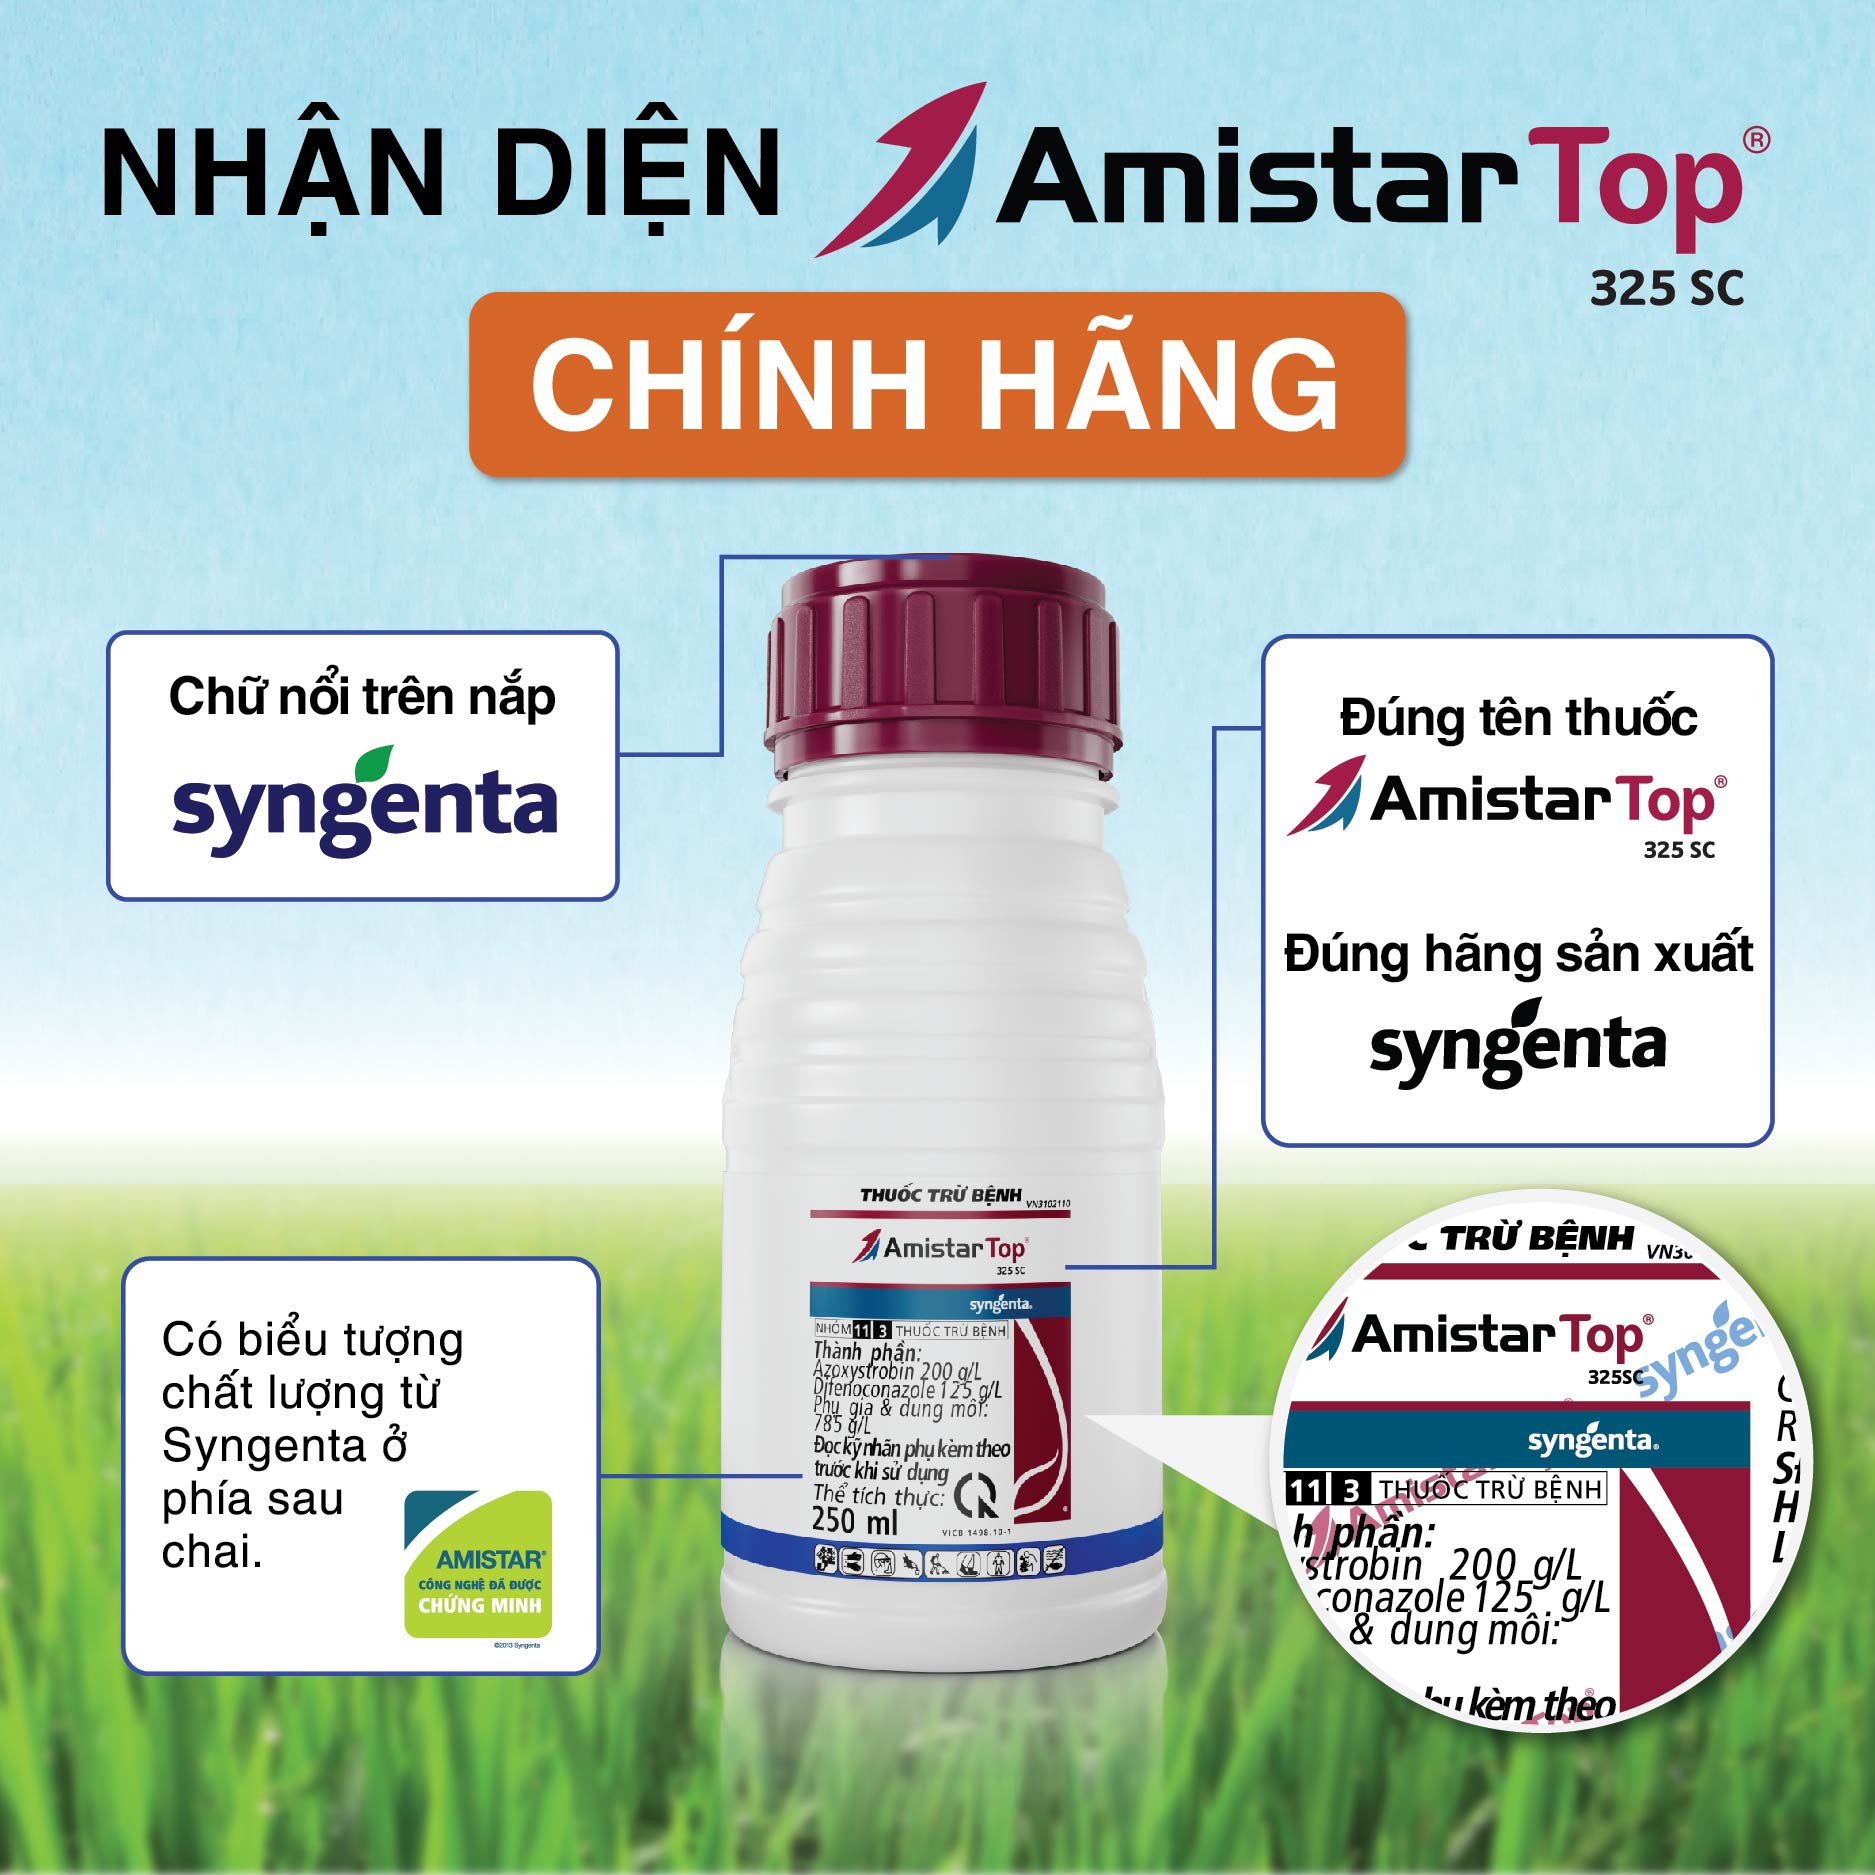 Nhan biet hang chinh hang Syngenta - Amistar Top